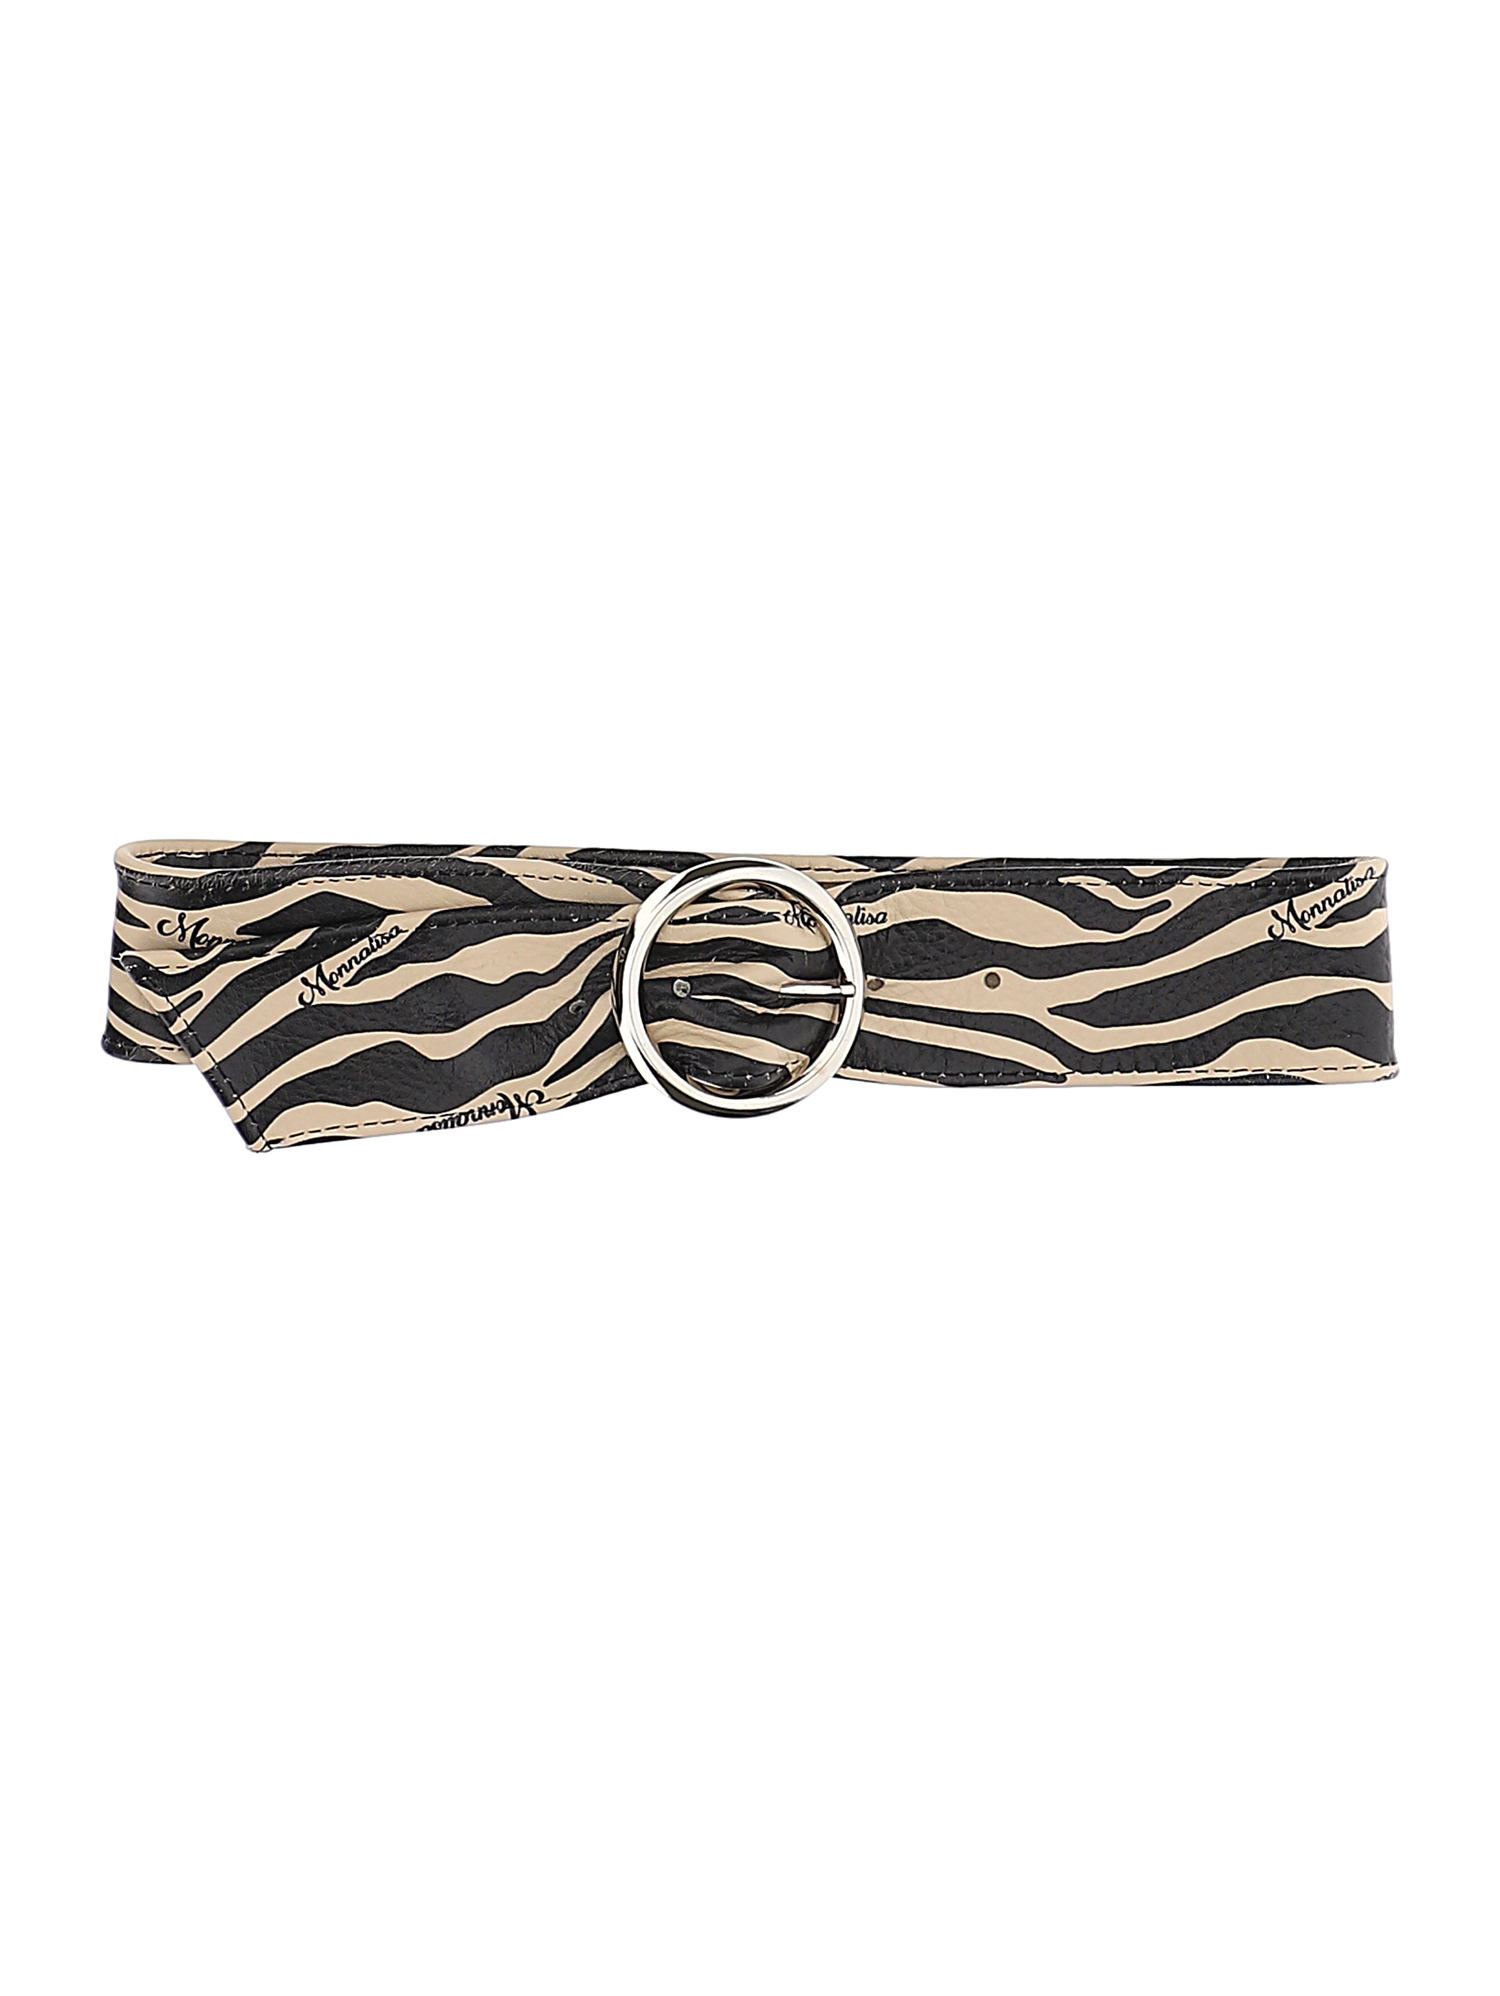 Monnalisa Girls Accessories Belts Zebra print leather belt 